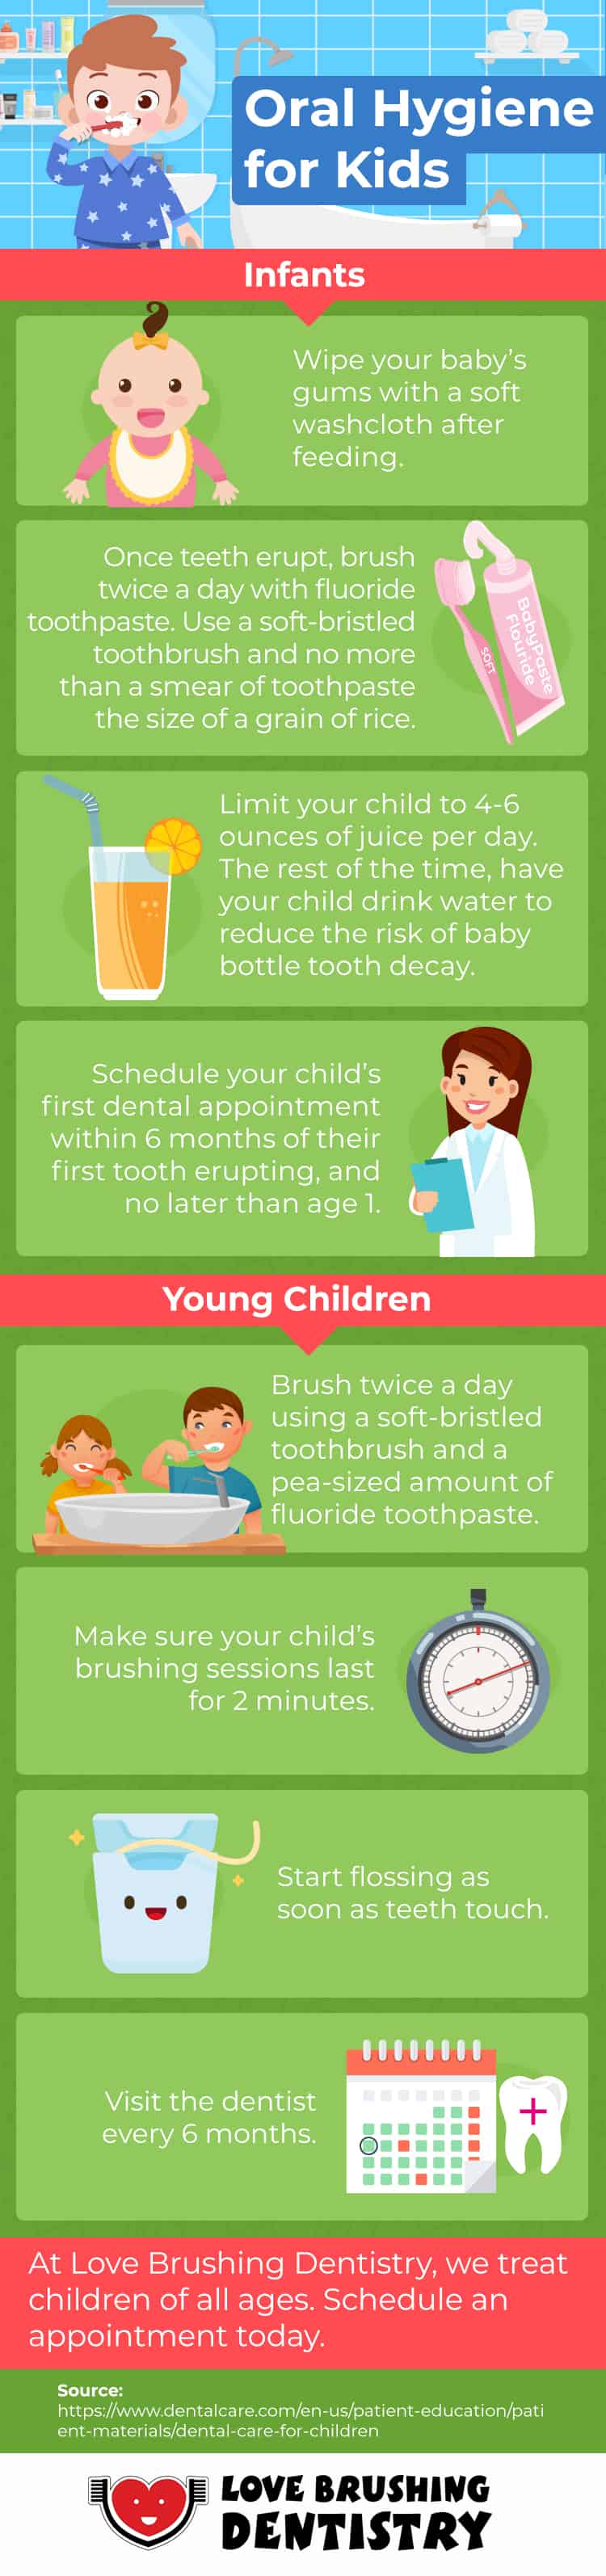 infograhpic highlighting oral hygiene tips for children